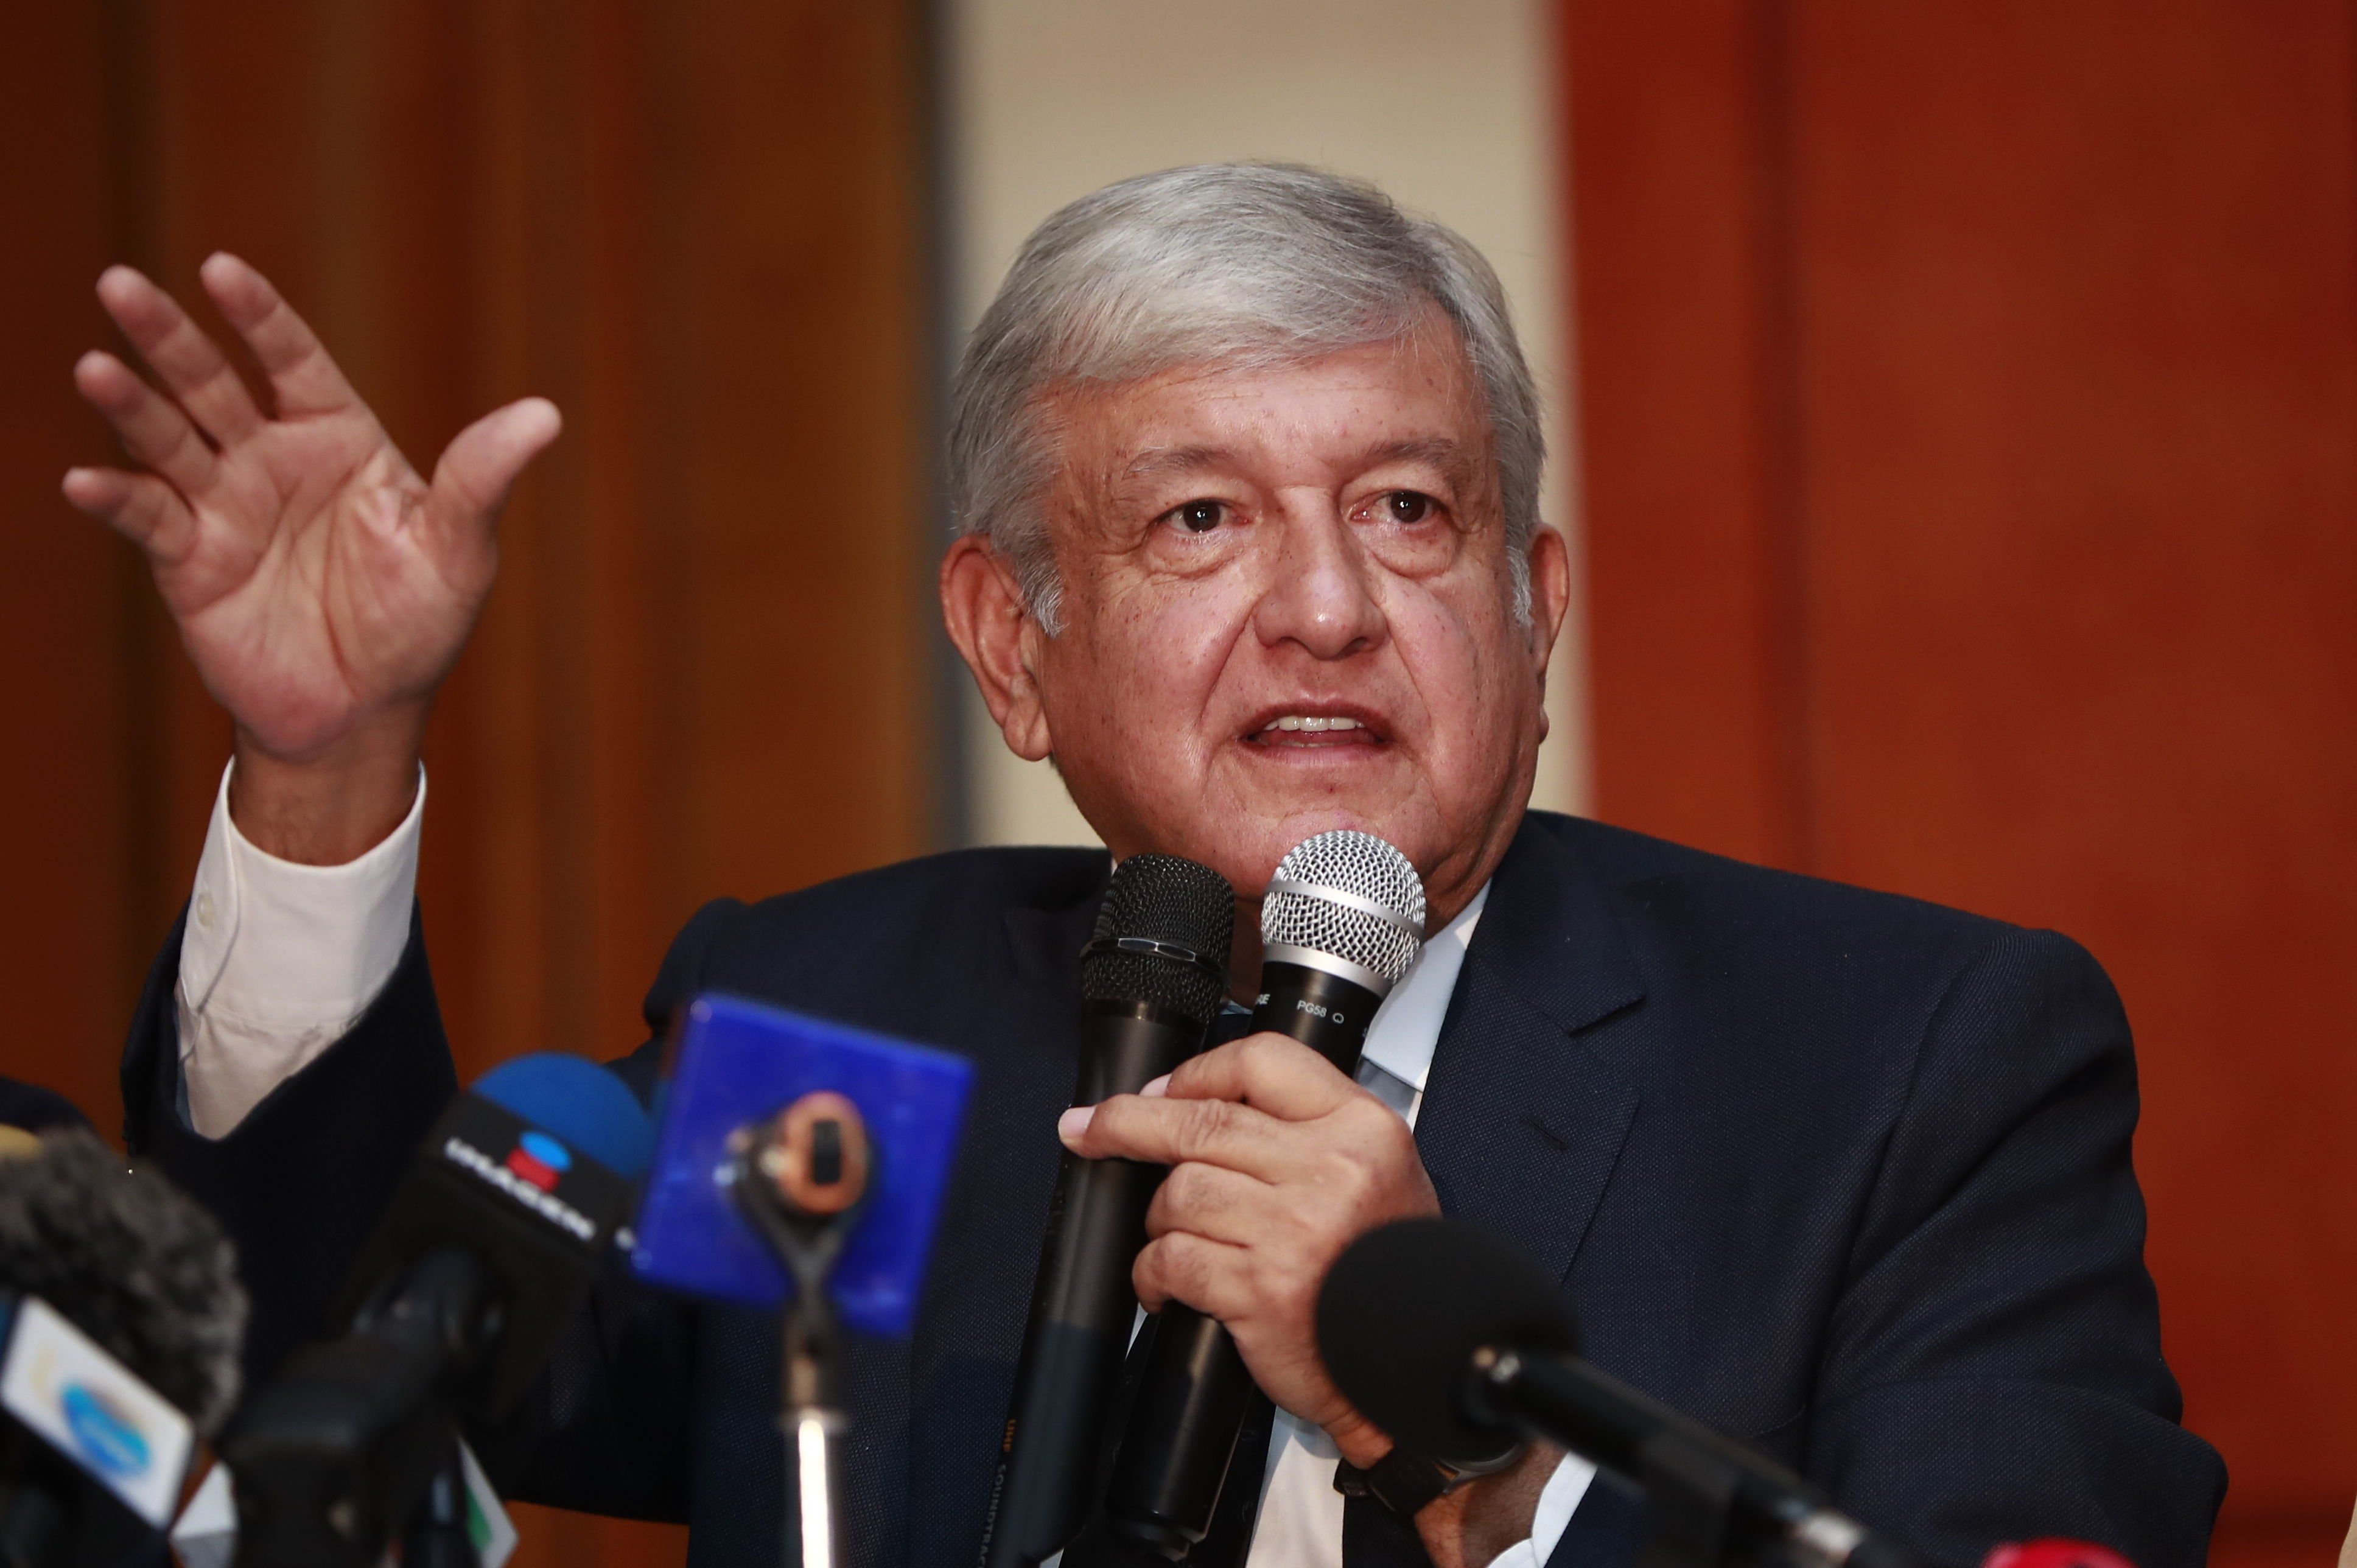  Equipo de López Obrador convoca consulta para llegar a acuerdo educativo